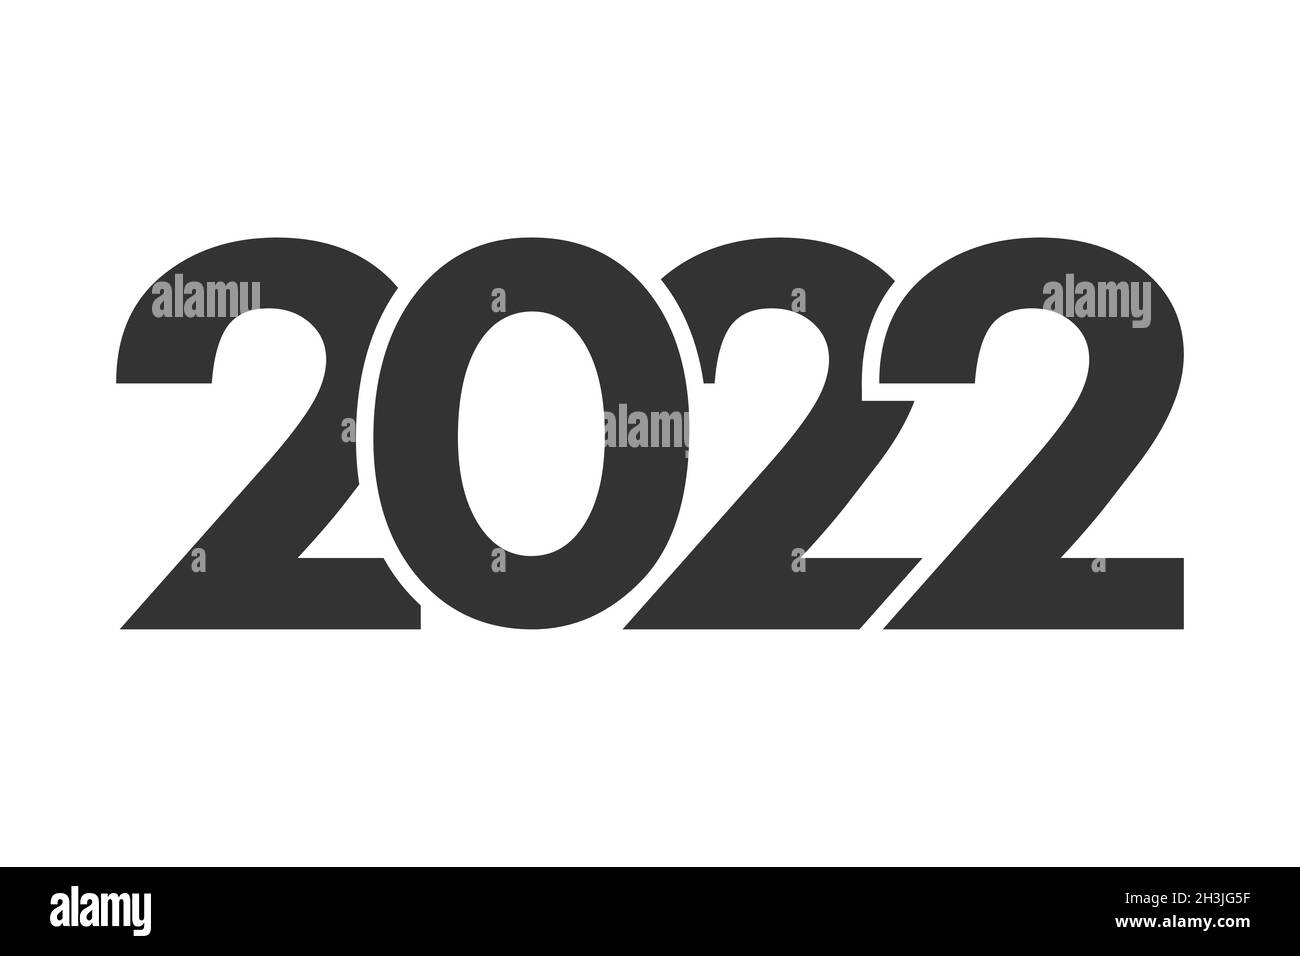 Happy New Year 2021 Text Design Logo Vector Illustration Stock Vector